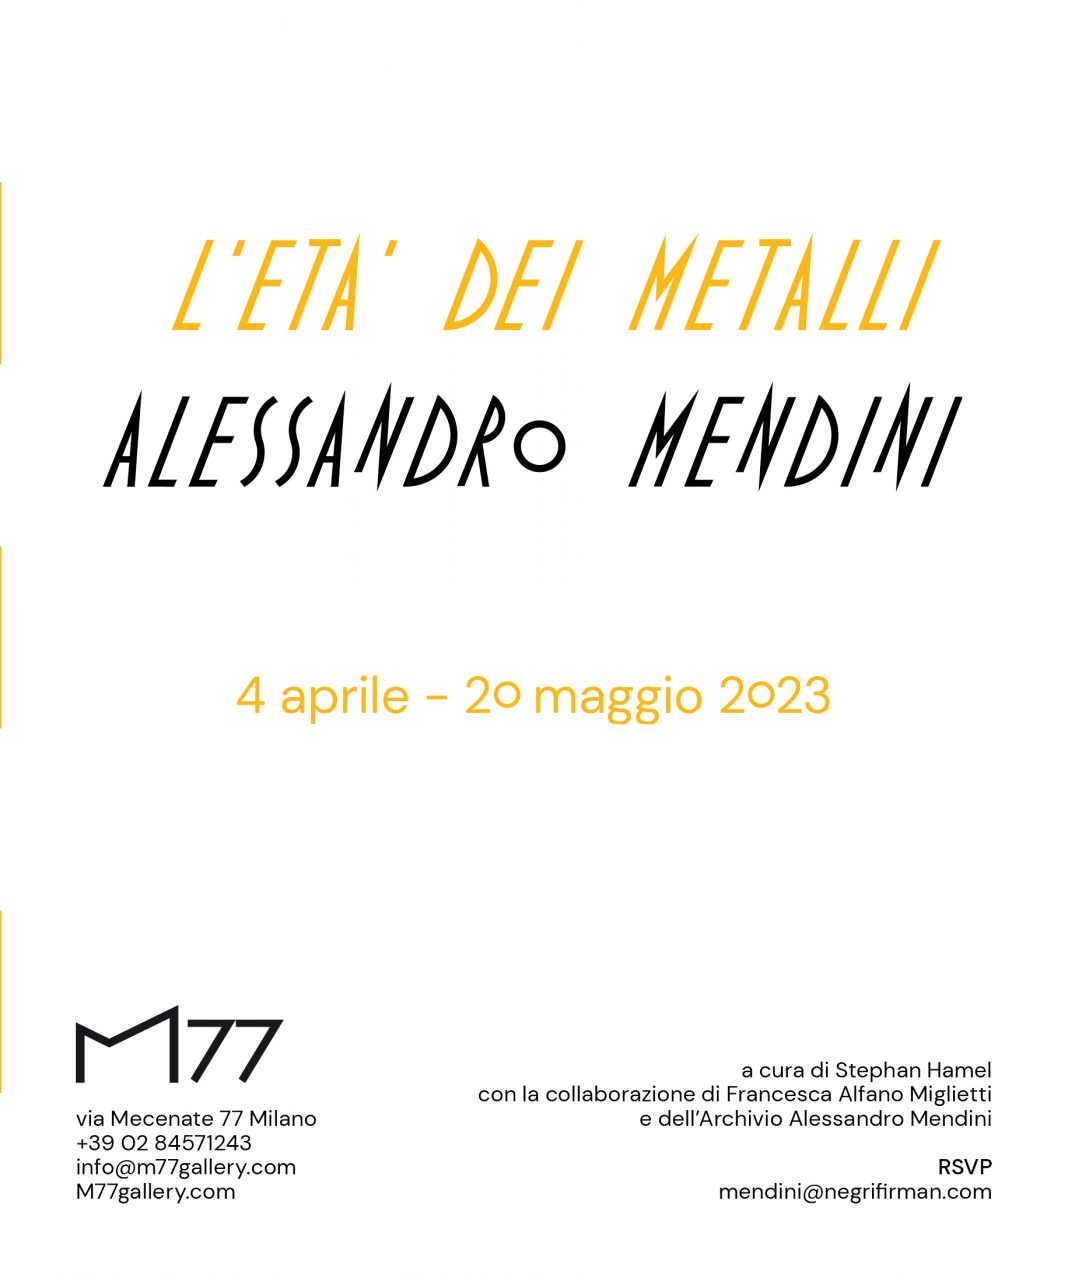 Alessandro Mendini – L’età dei metallihttps://www.exibart.com/repository/media/formidable/11/img/3c9/LOCANDINA-Mendini_DEF_RSVP2-1068x1274.jpg